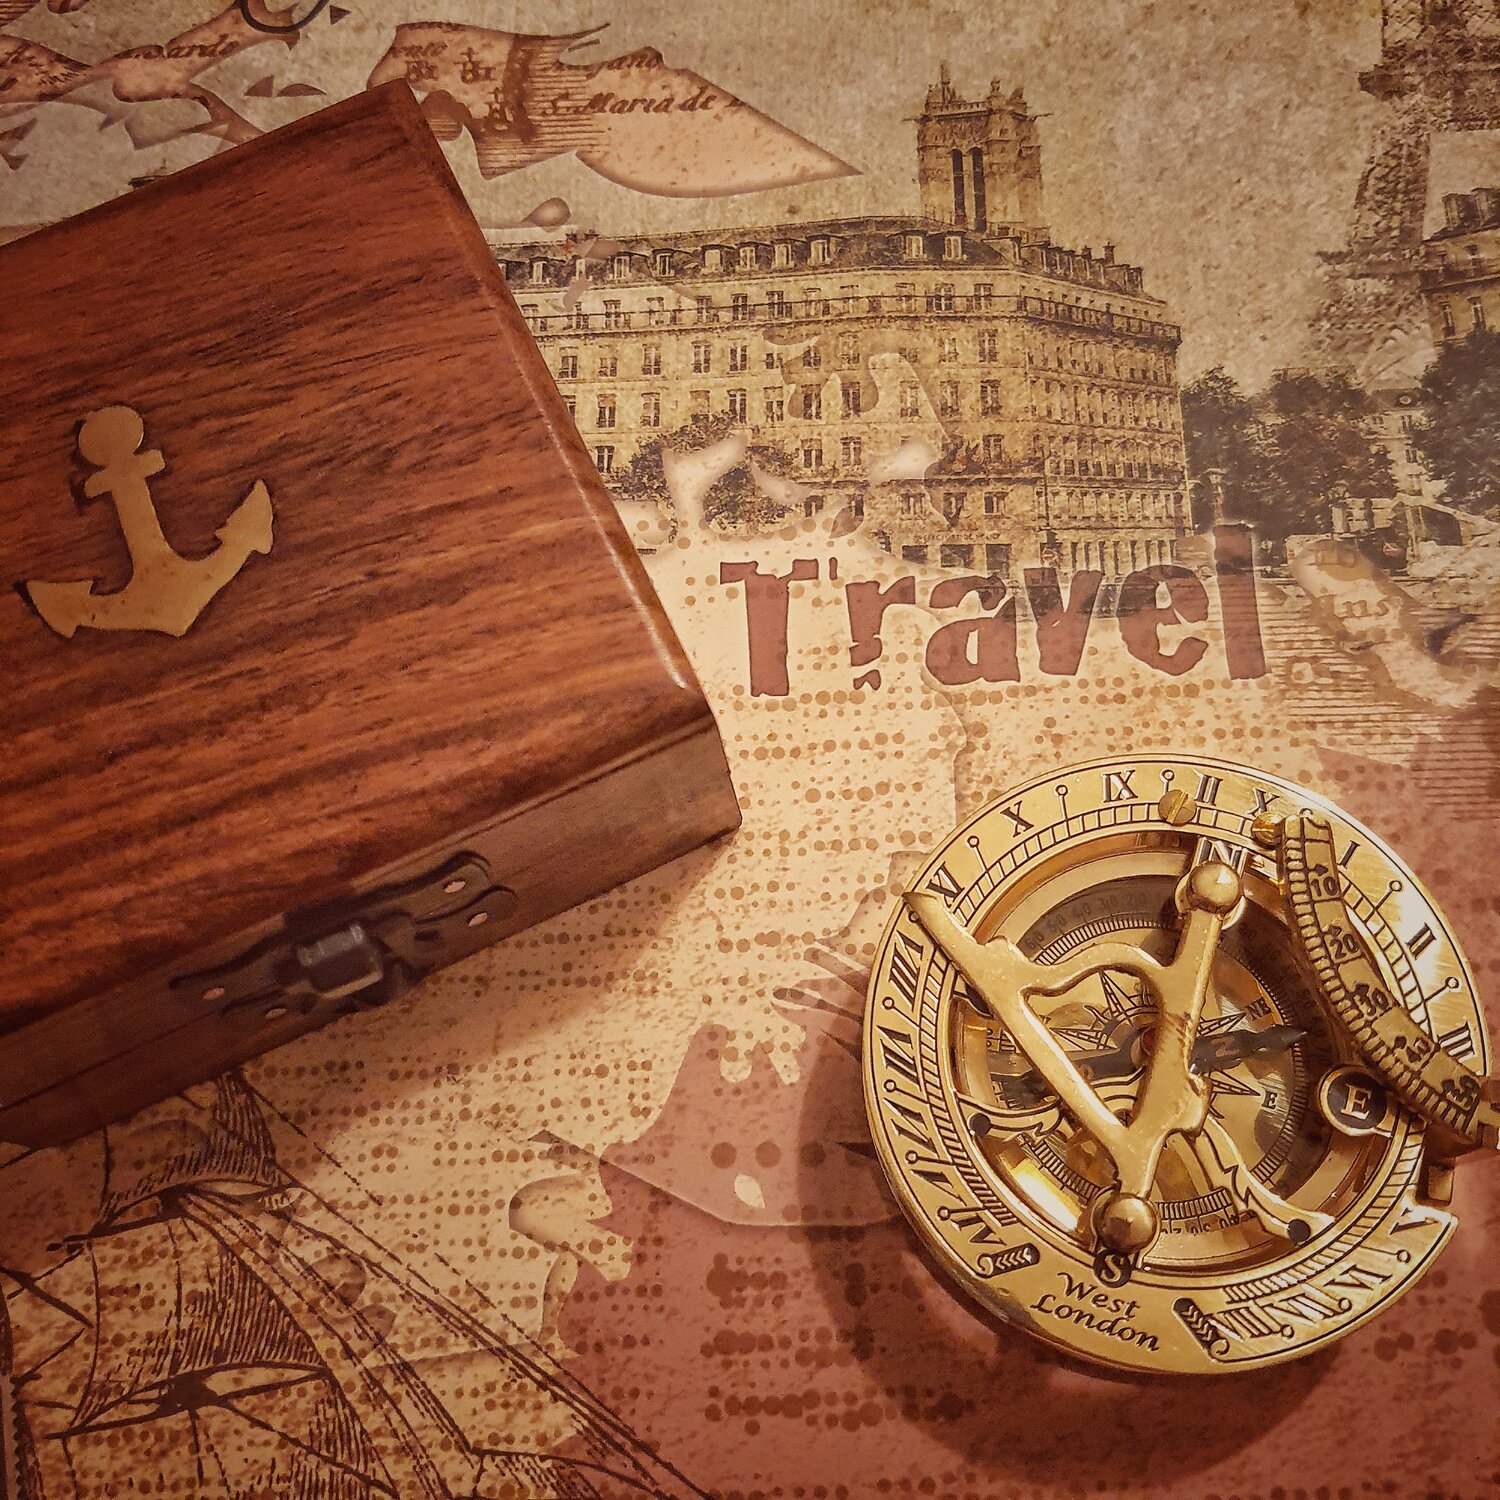 Admiral's Brass Sundial Compass 4 - GoNautical